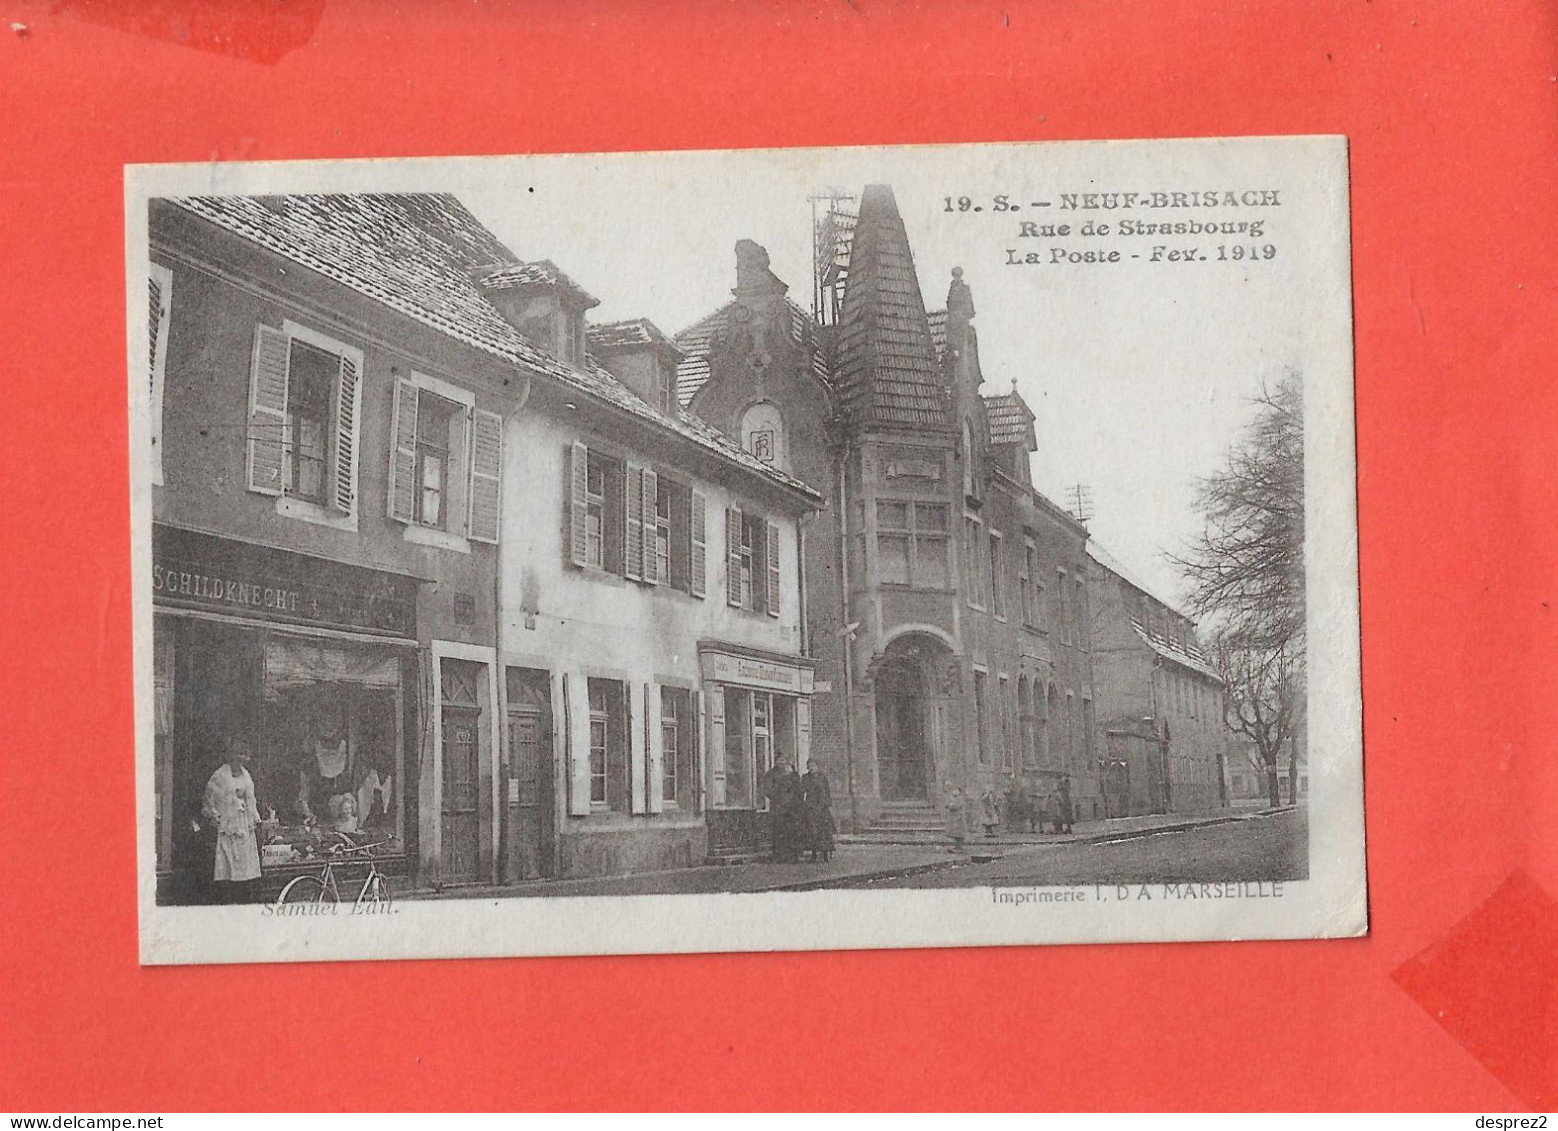 68 NEUF BRISACH Cpa Animée Rue De Strasbourg La Poste Février 1919 Edit Samuel - Neuf Brisach